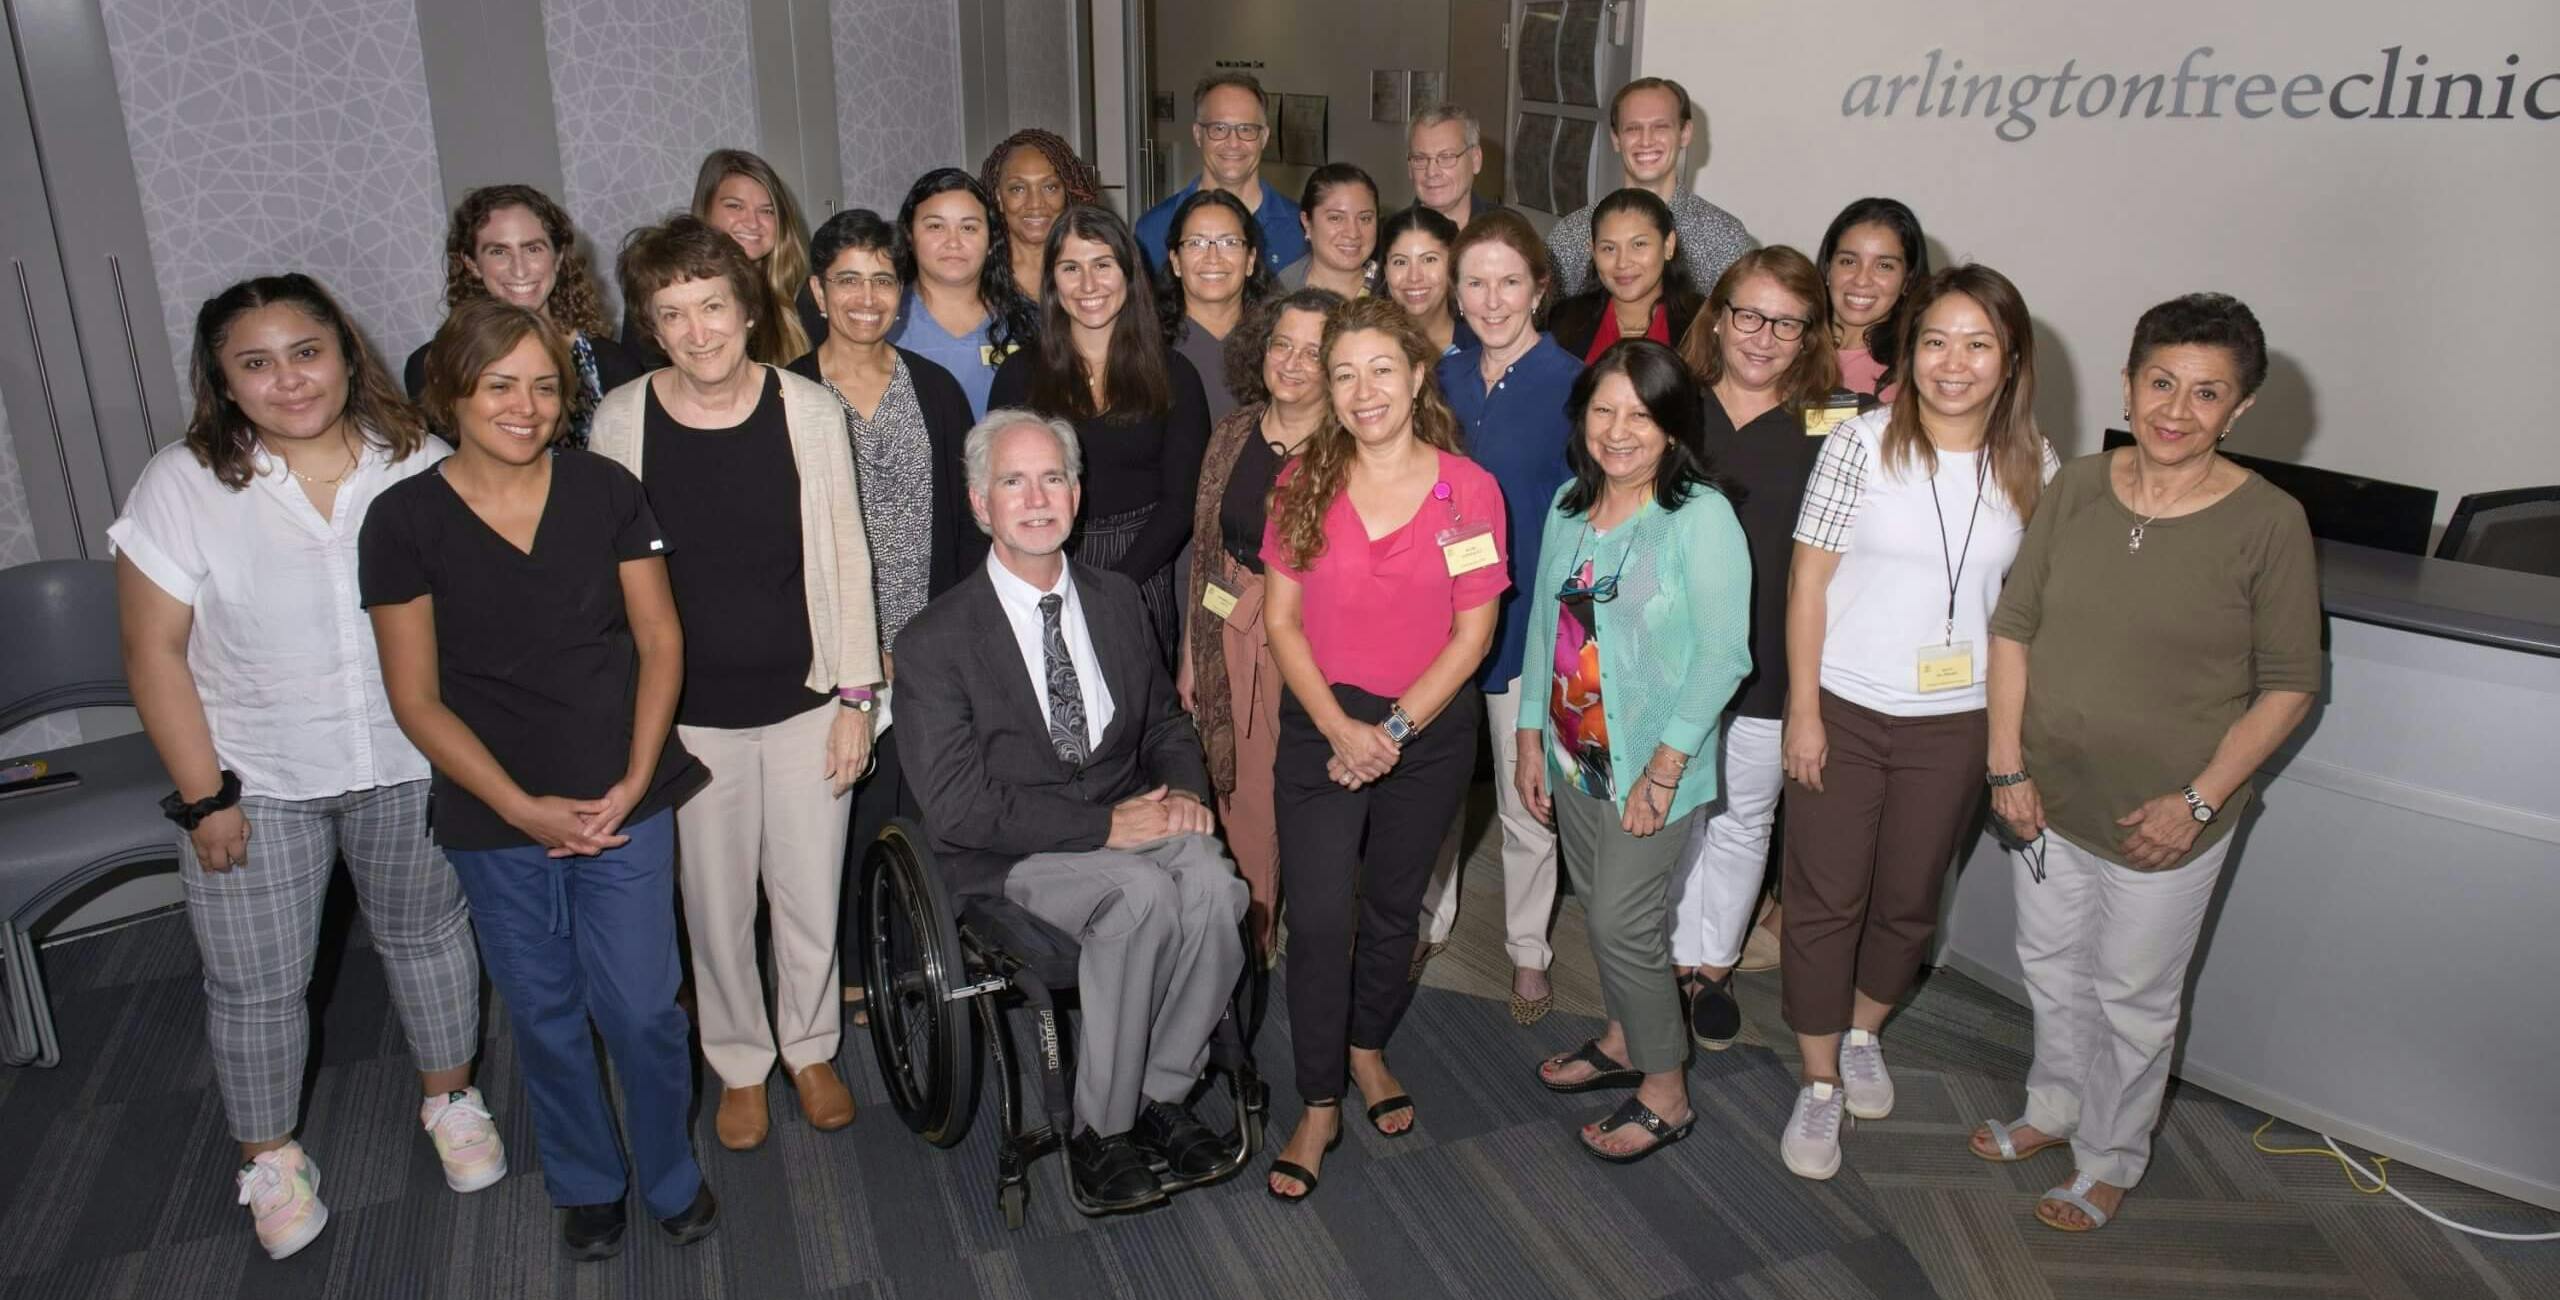 Arlington Free Clinic's team photo